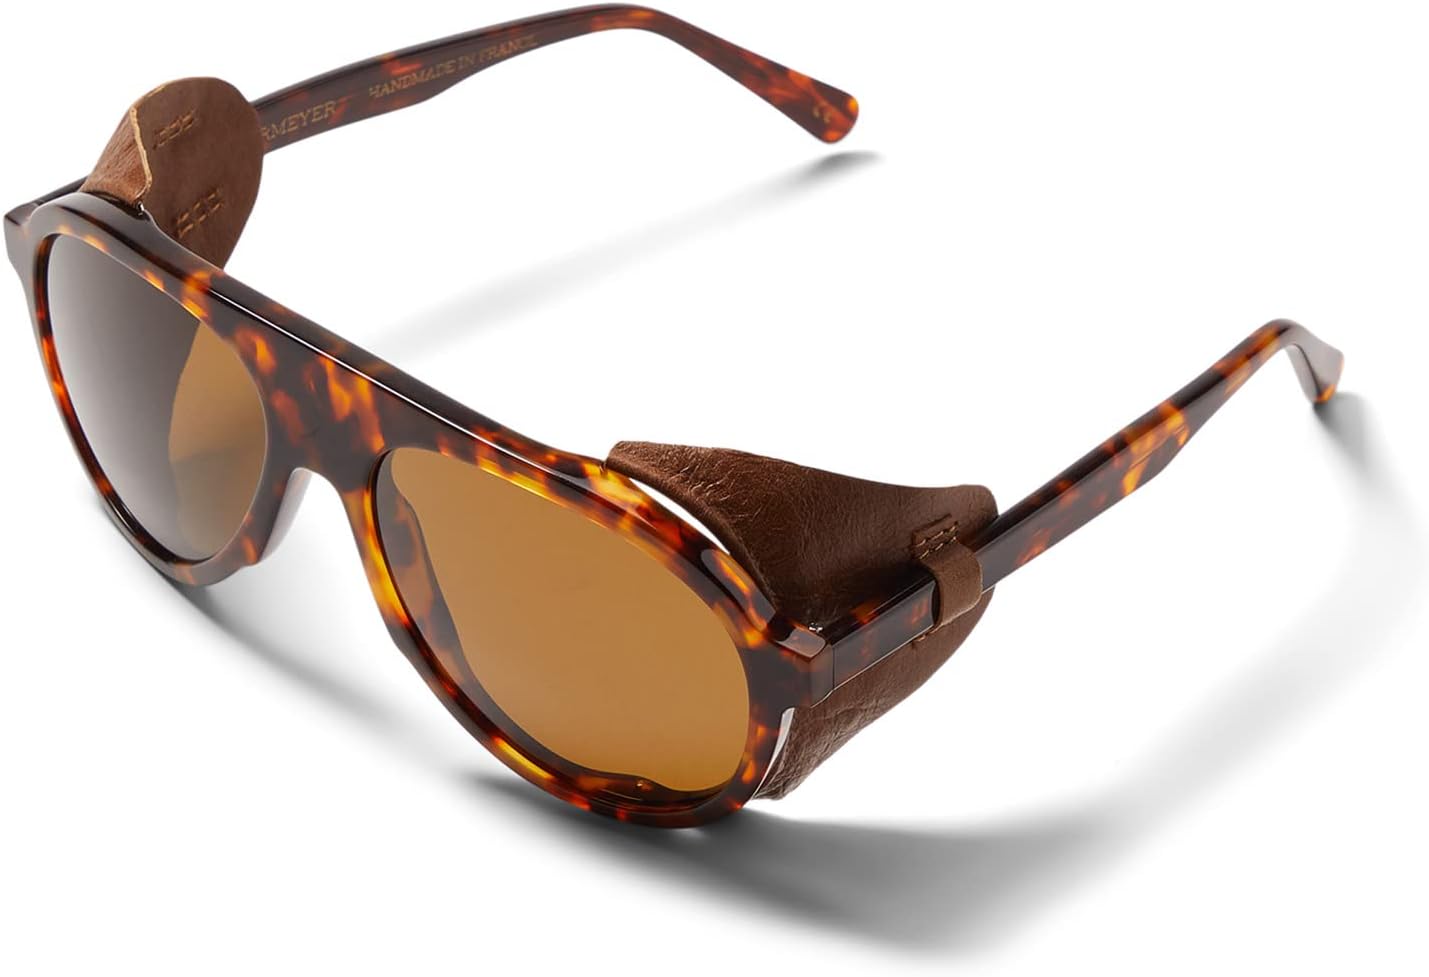 солнцезащитные очки rallye sunglasses obermeyer цвет clear polarized Солнцезащитные очки Rallye Sunglasses Obermeyer, цвет Dark Tortoise Polarized